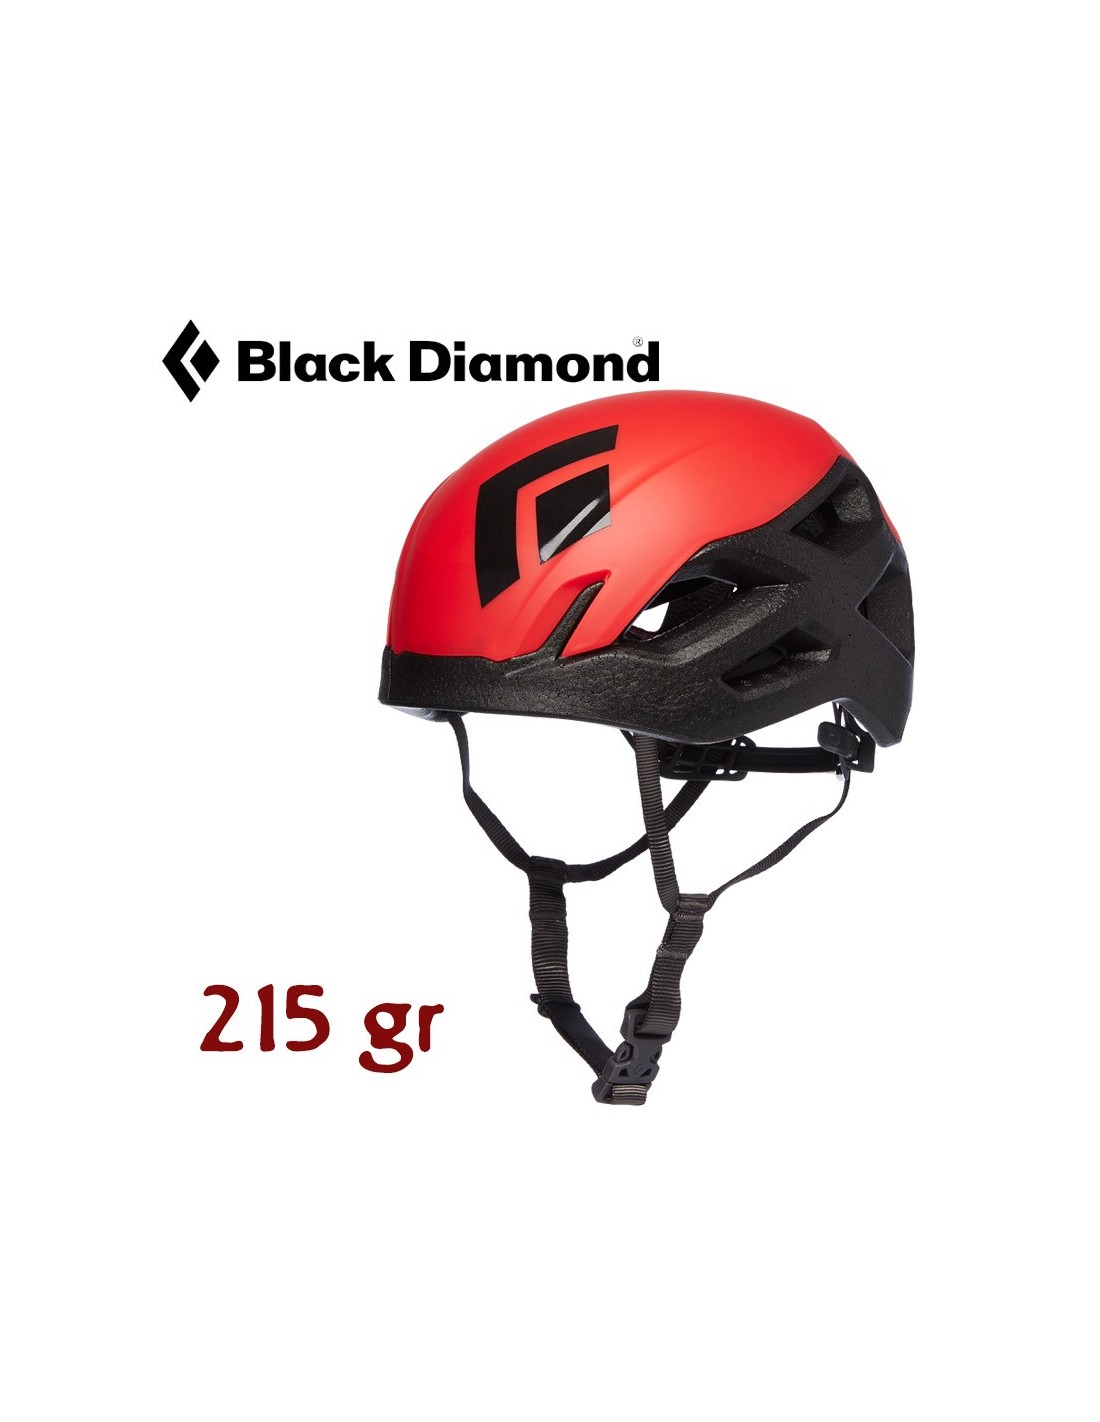 BLACK DIAMOND-VISION HELMET HYPER RED - Casco escalada